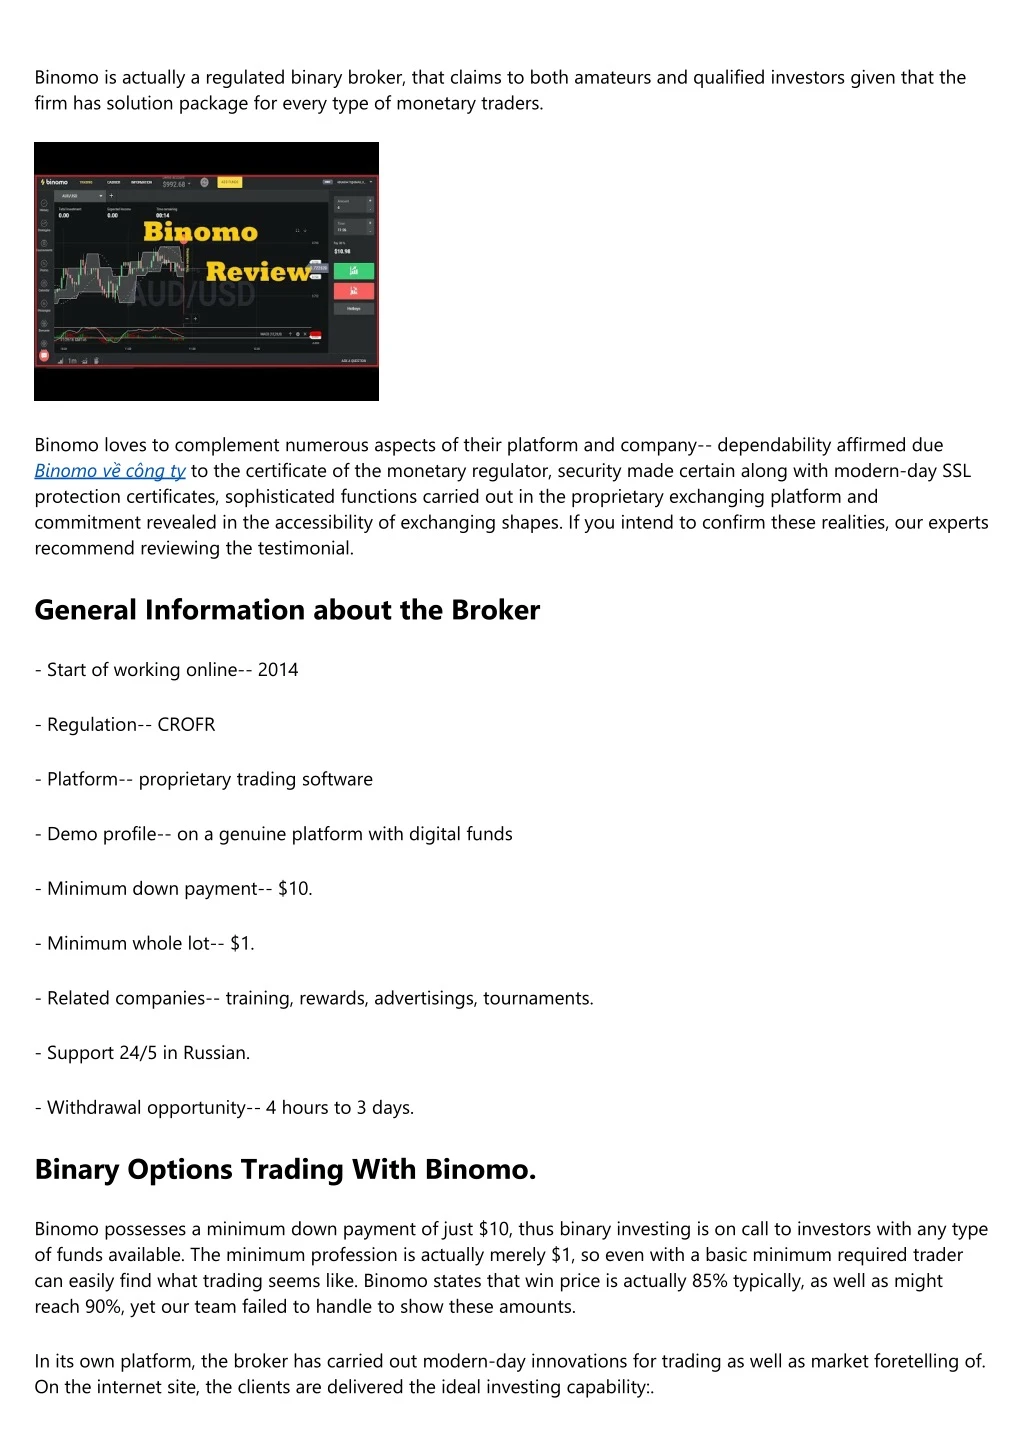 binomo is actually a regulated binary broker that